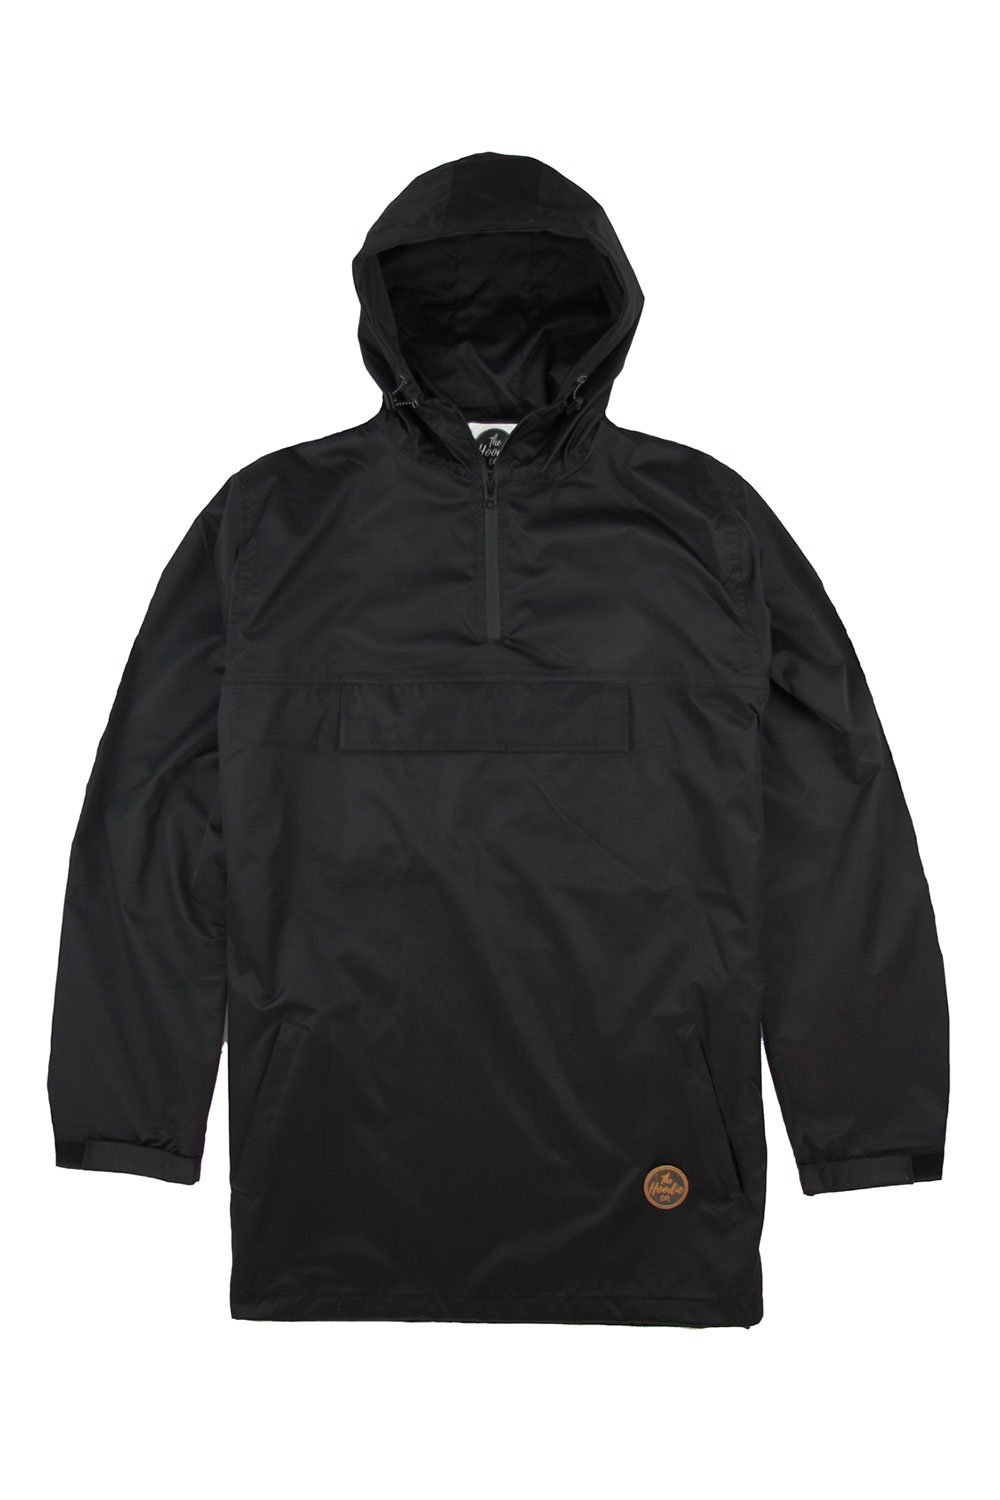 Mission Spray jacket custom printed | The Hoodie Co